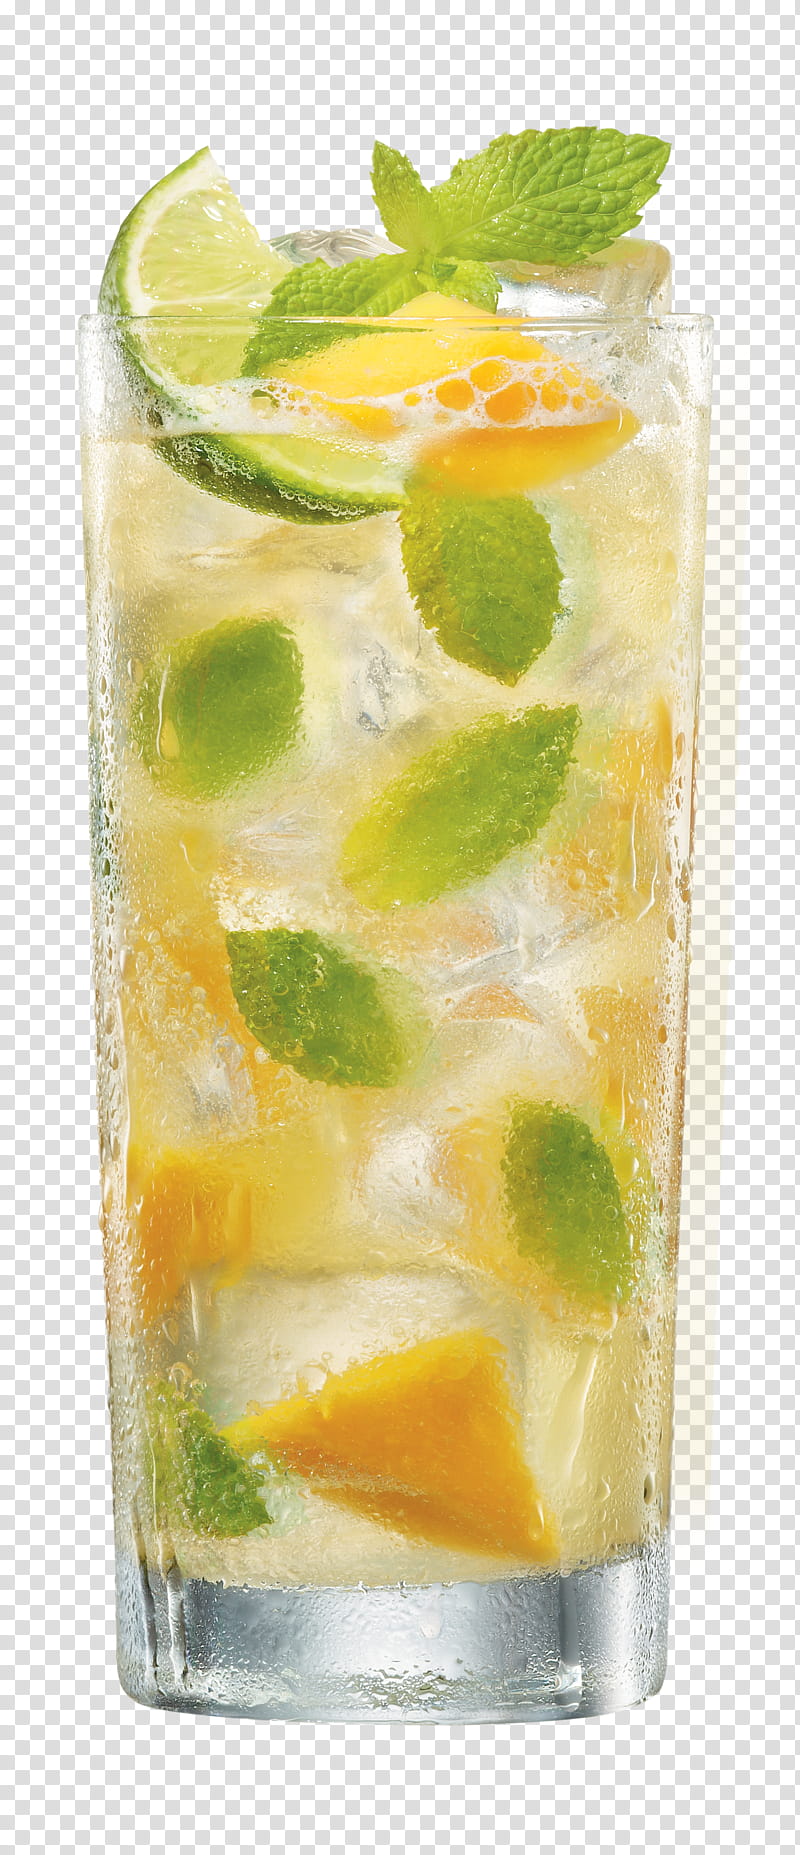 Mango, Mojito, Caipirinha, Cocktail, Rum, Lime, Bacardi, Drink transparent background PNG clipart